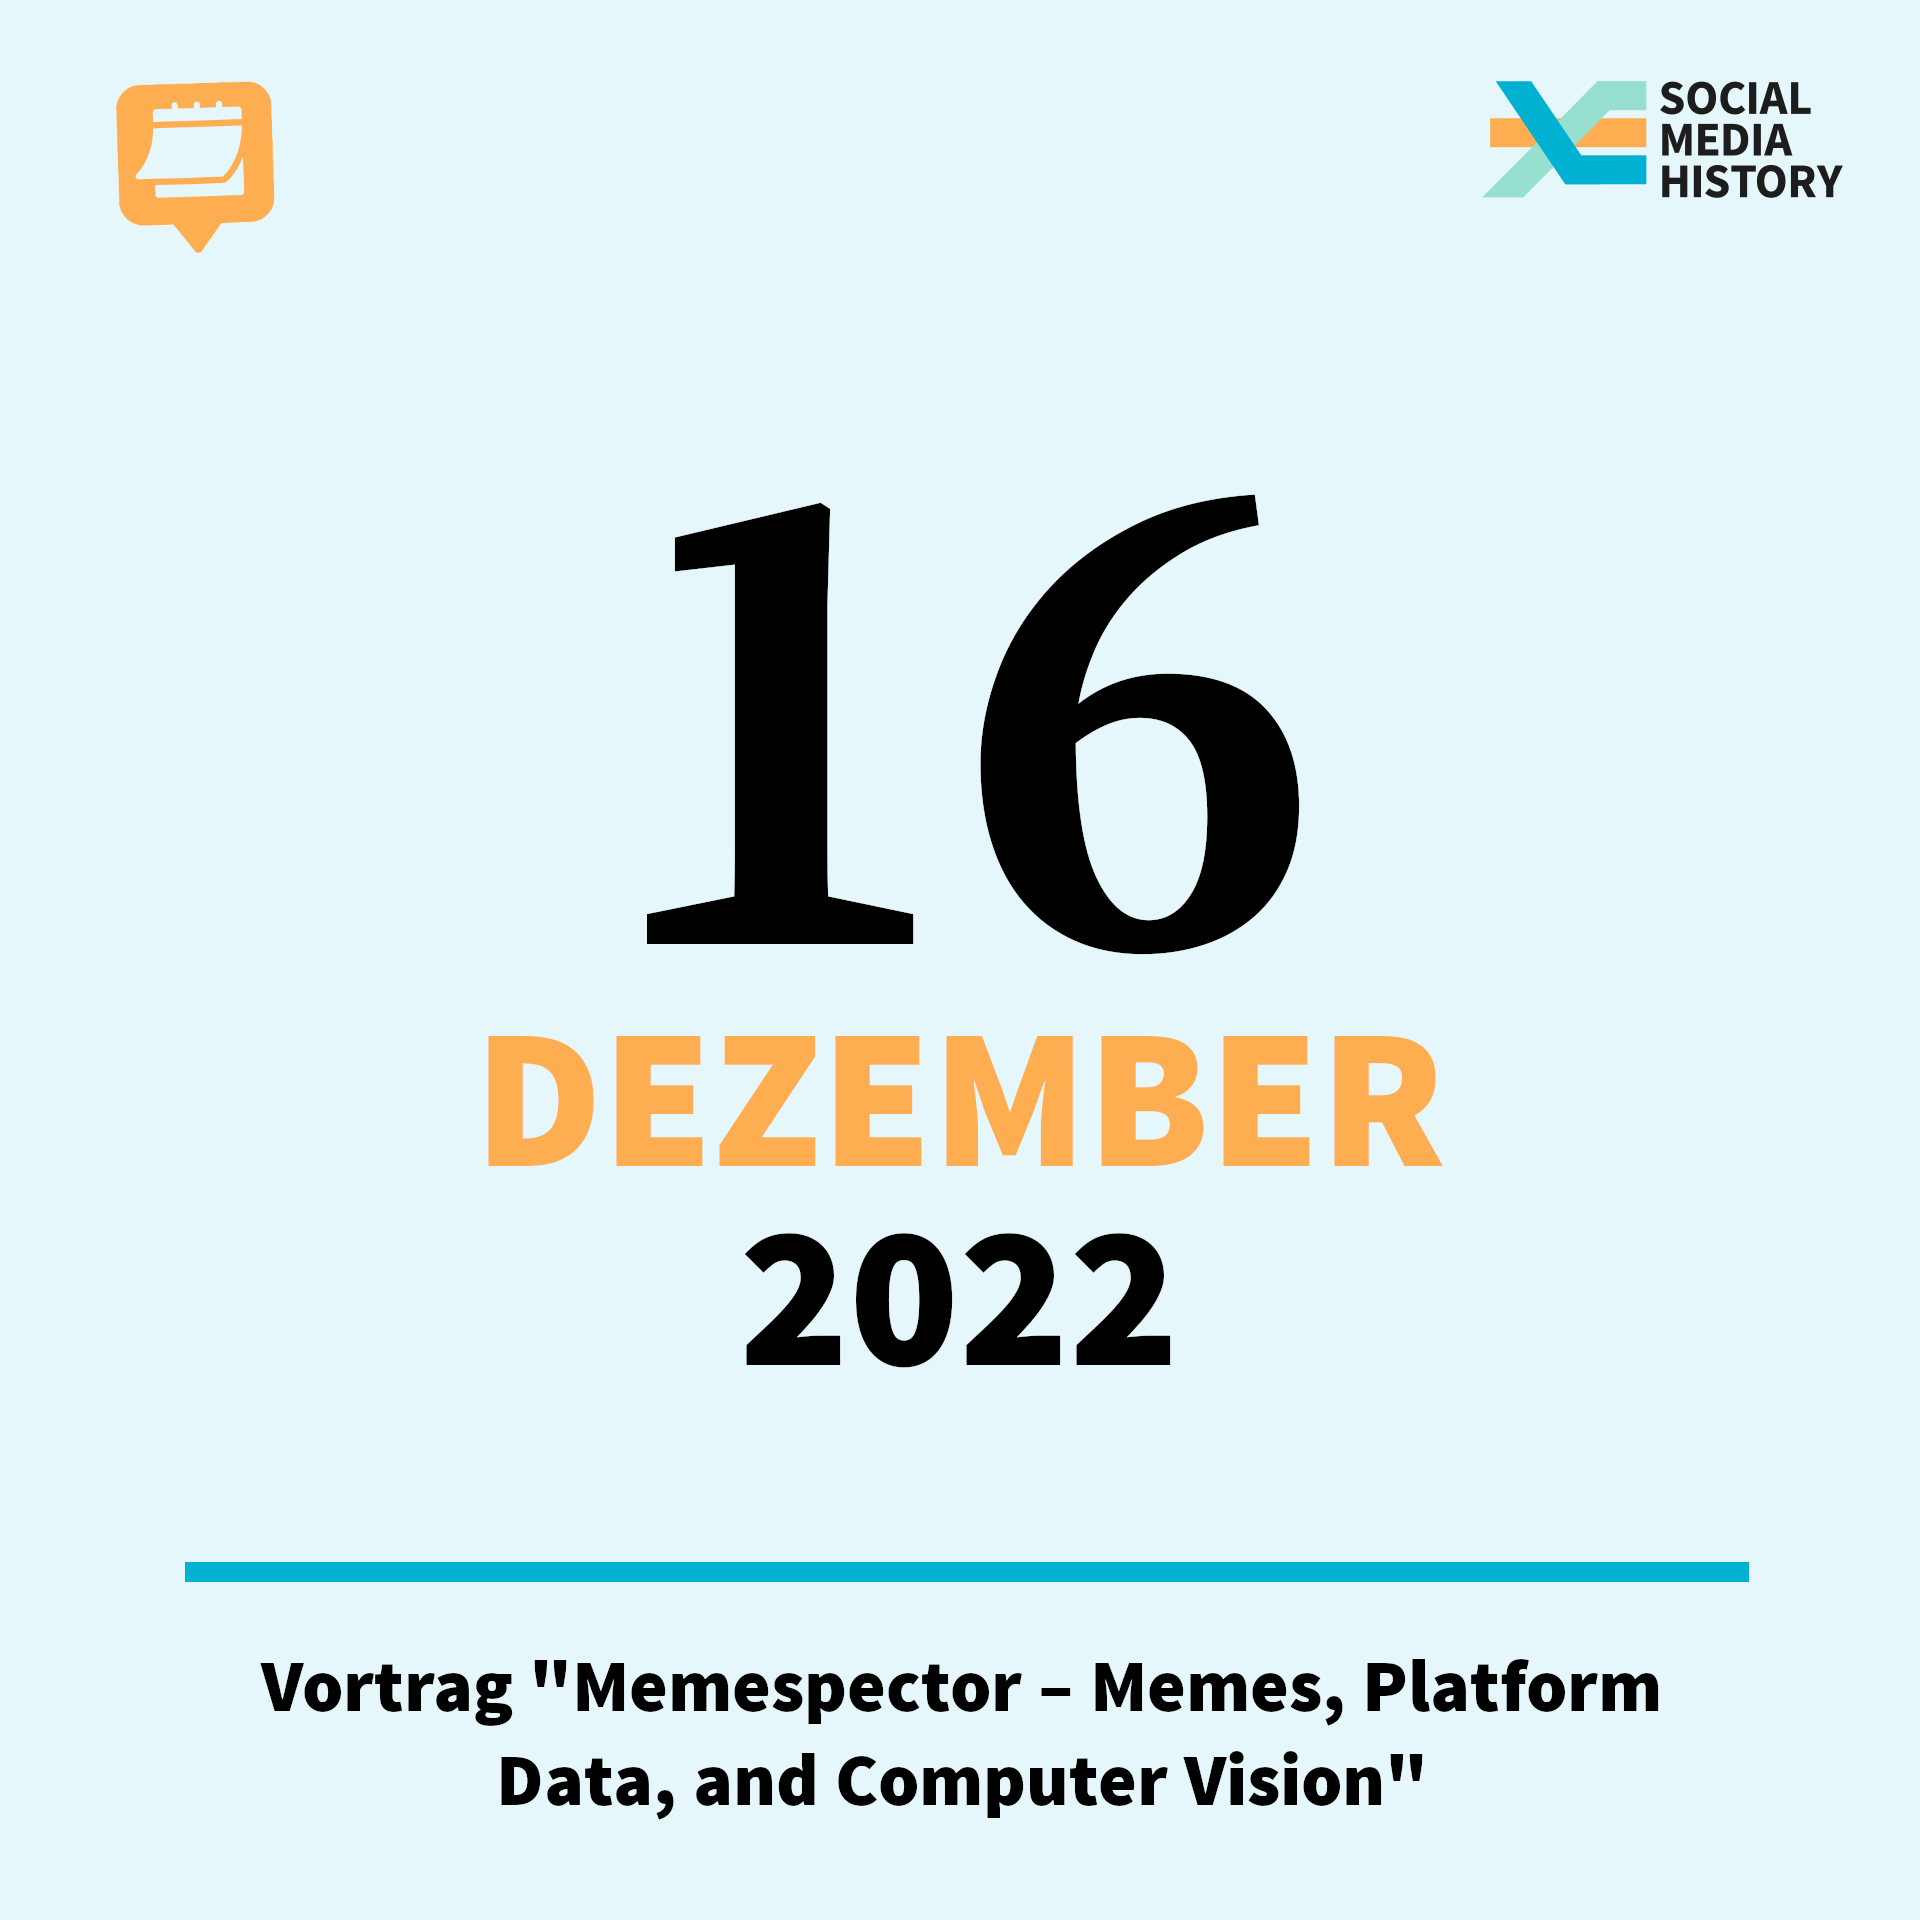 Ankündigung Vortrag "Memespector - Memes, Plattform Data and Computer Vision." Datum: 16. Dezember 2022.